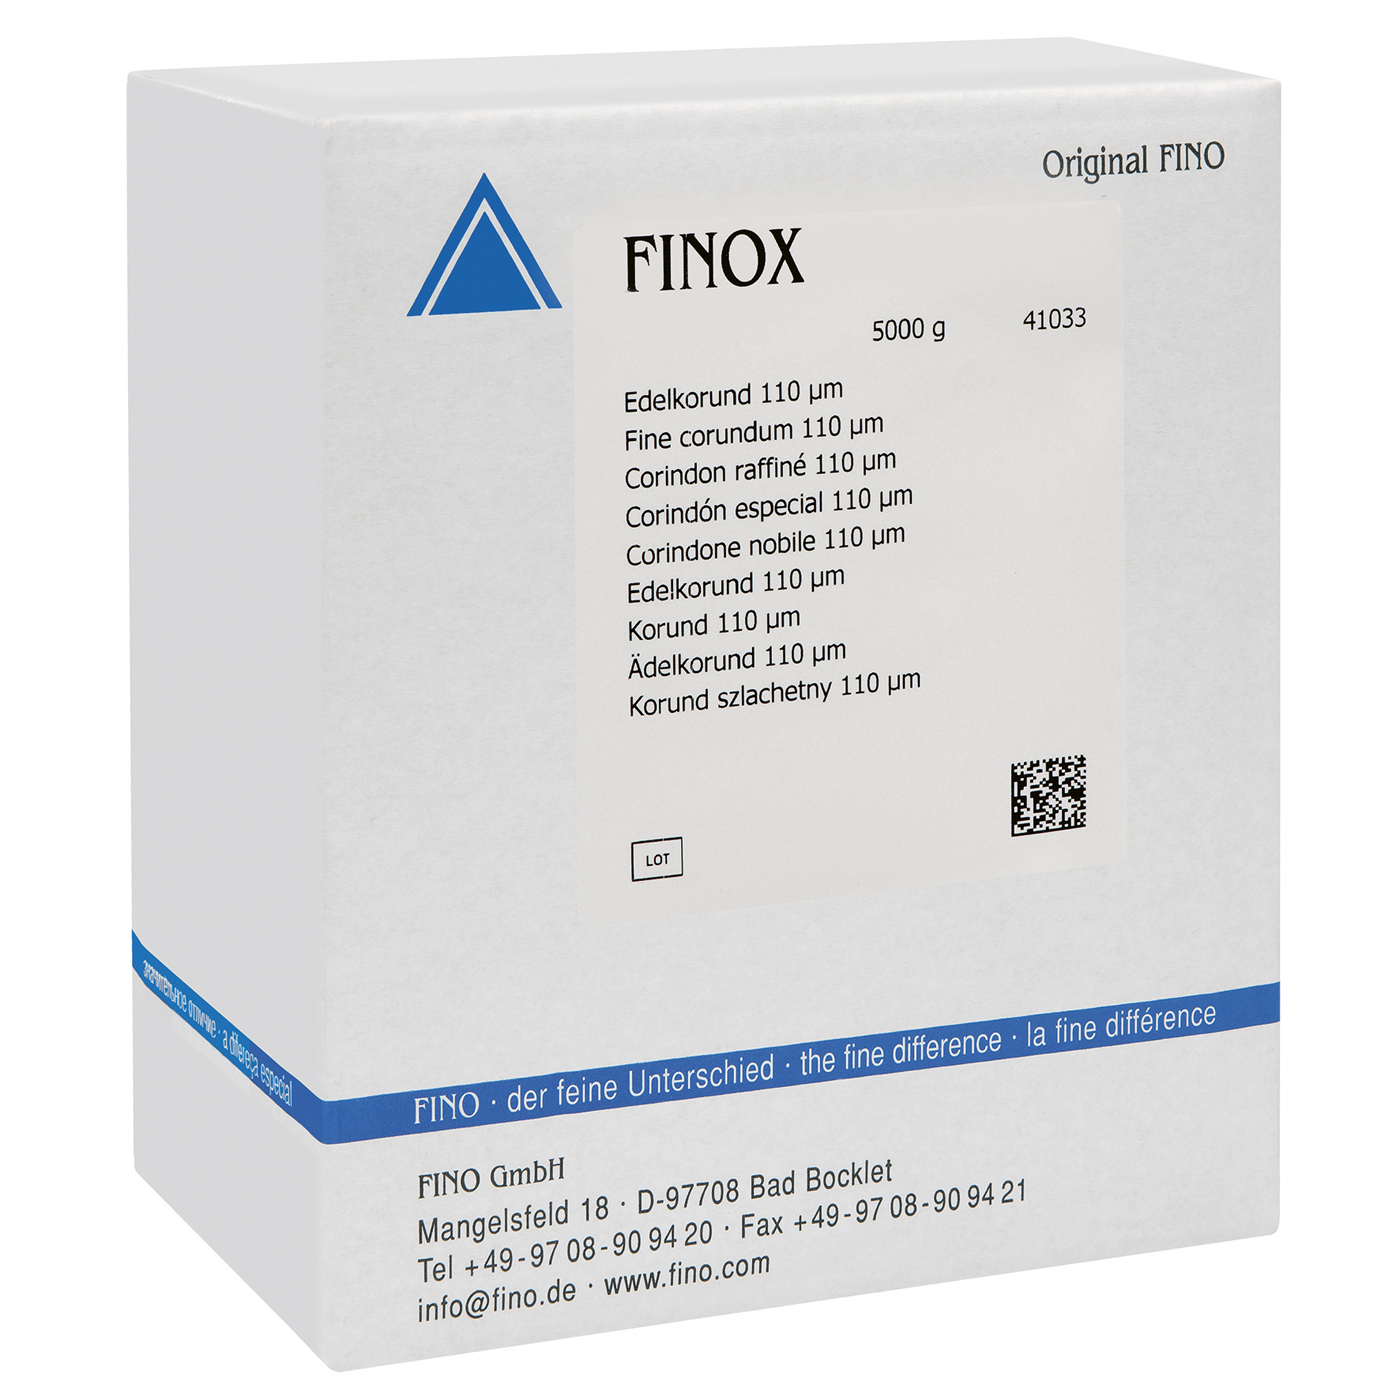 FINOX High-Grade Corundum, 110 µm - 5000 g